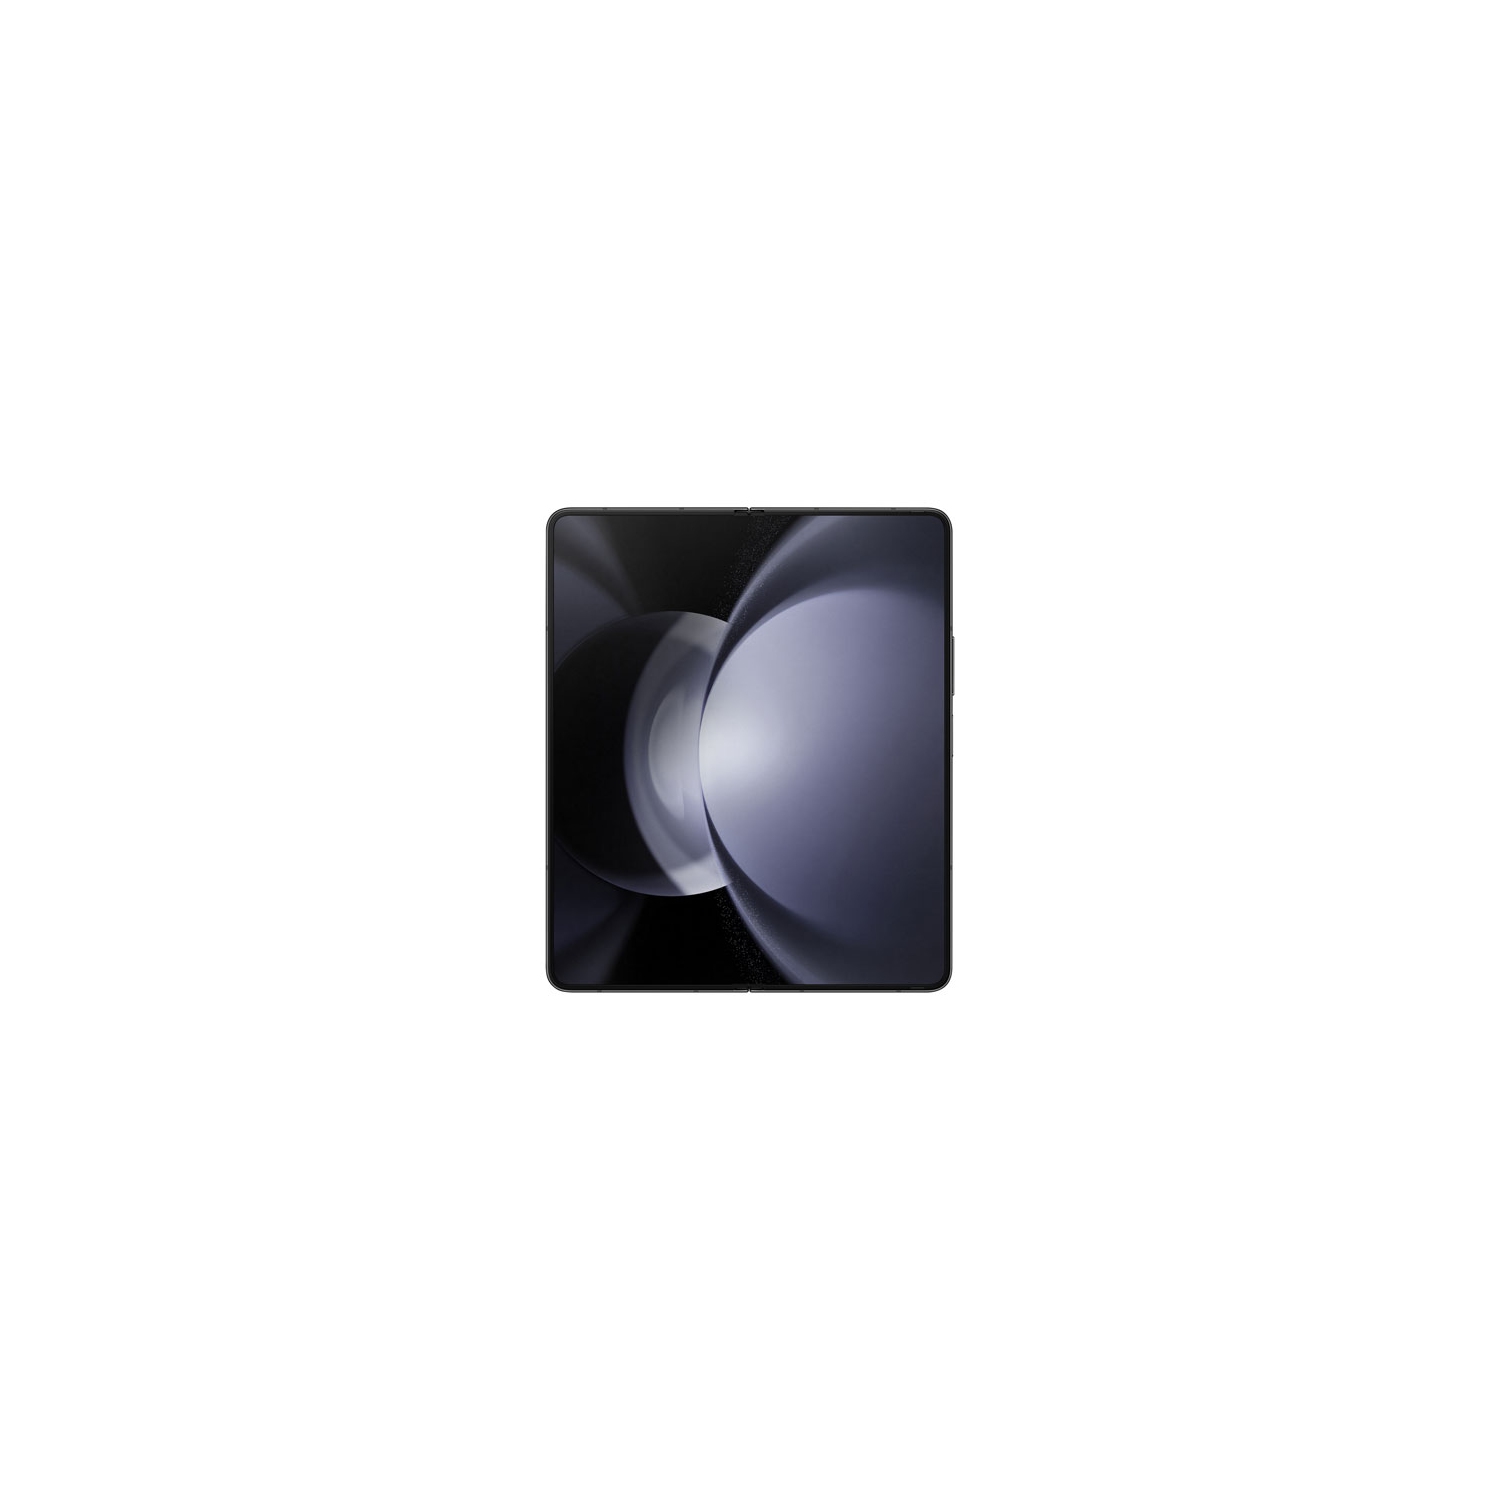 Samsung Galaxy Z Fold5 | 256GB – Smartphone - Black – Unlocked - New